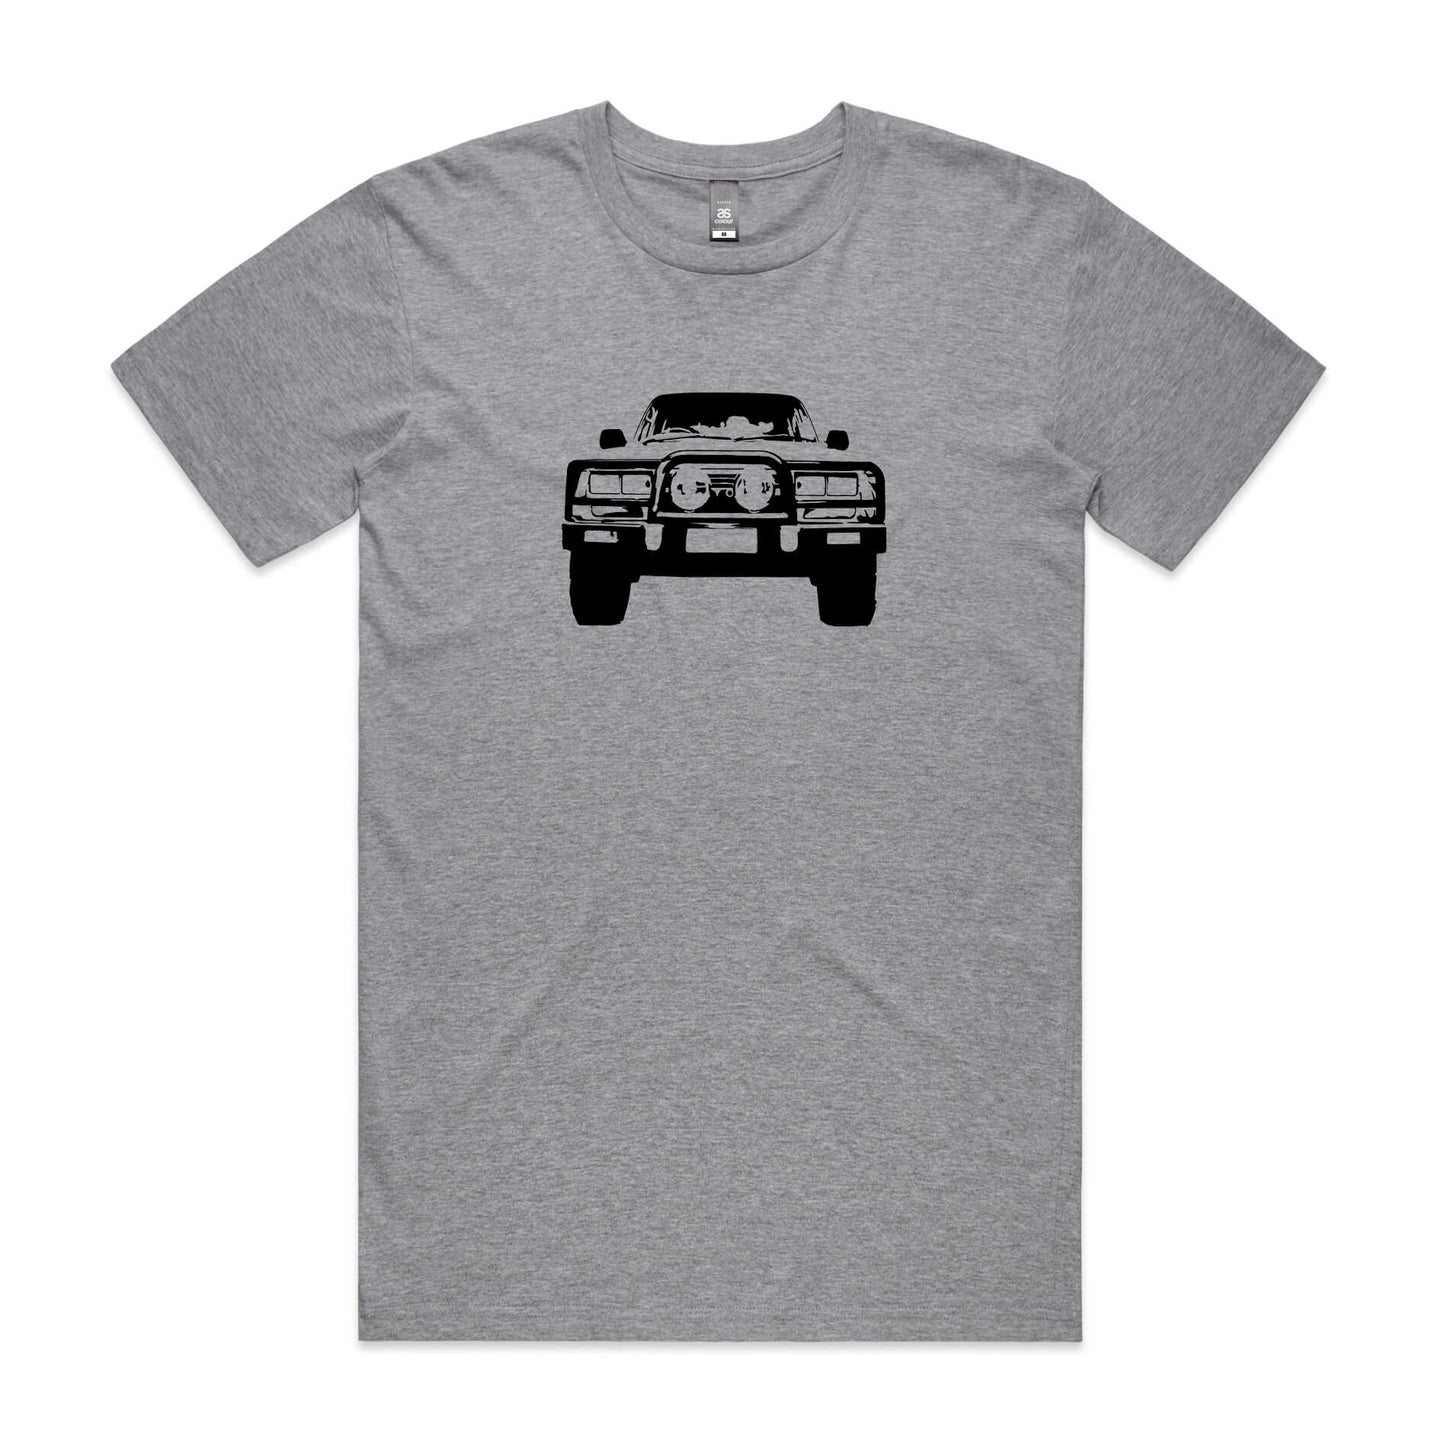 Toyota LandCruiser 80 Series t-shirt in grey